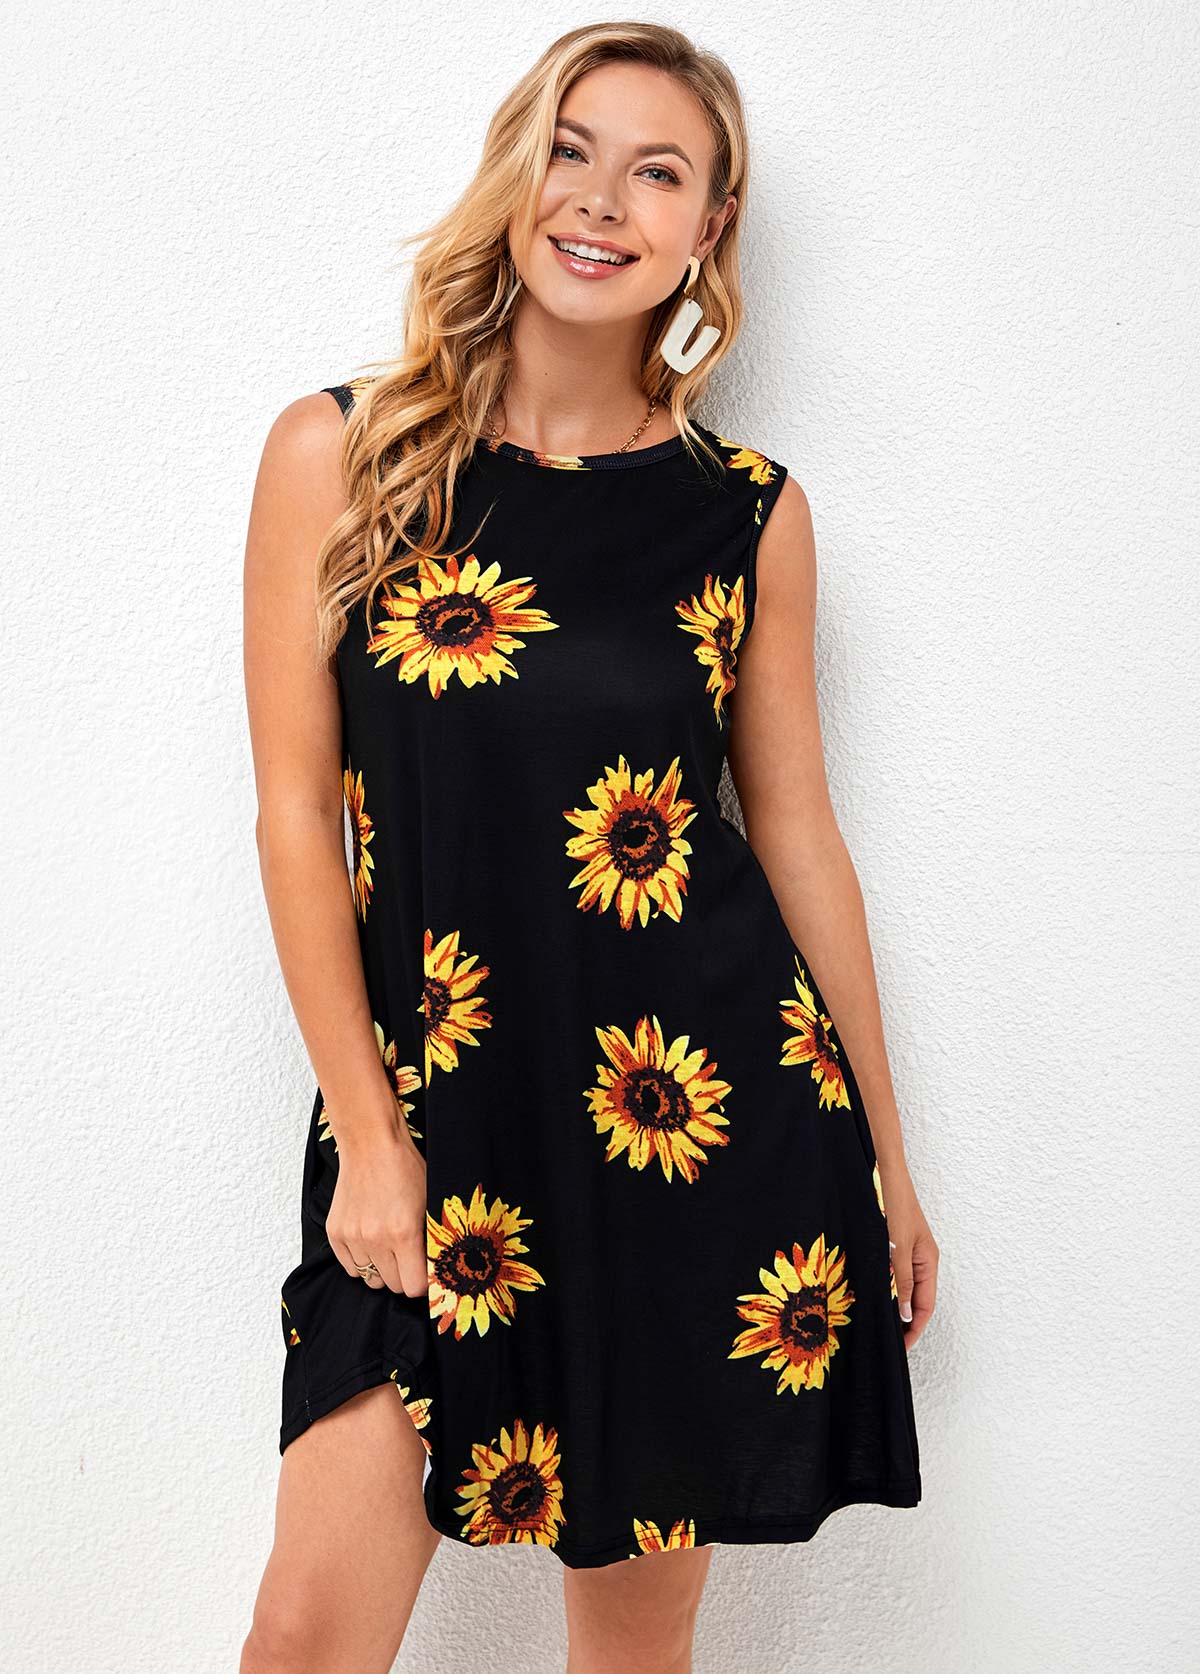 Sunflower Print Round Neck Sleeveless Dress